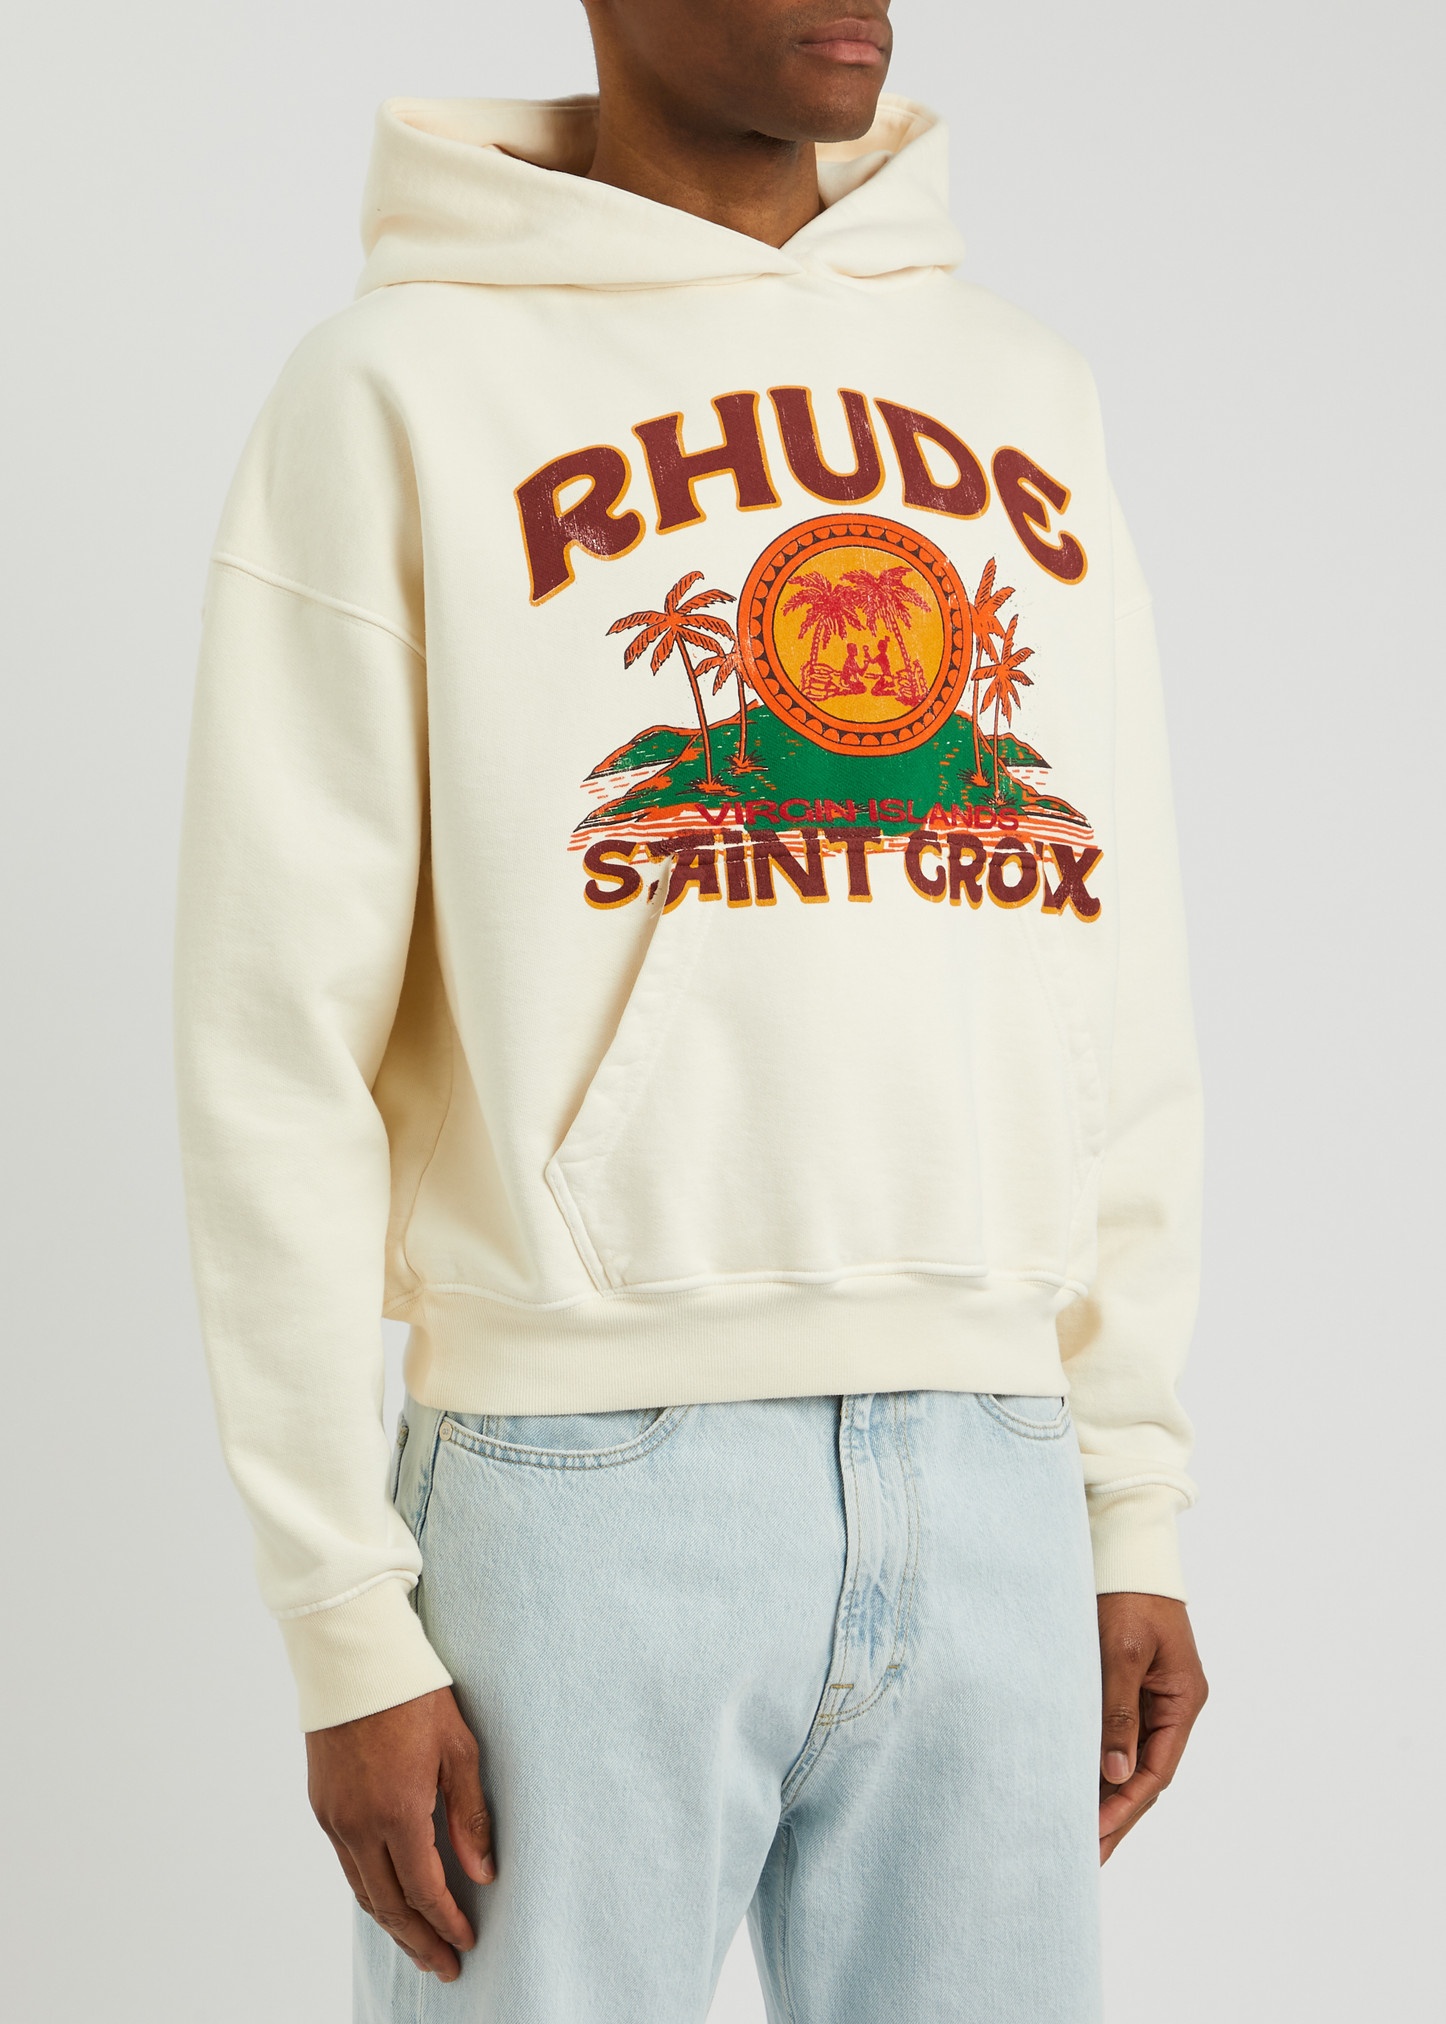 St Croix printed hooded cotton sweatshirt - 2